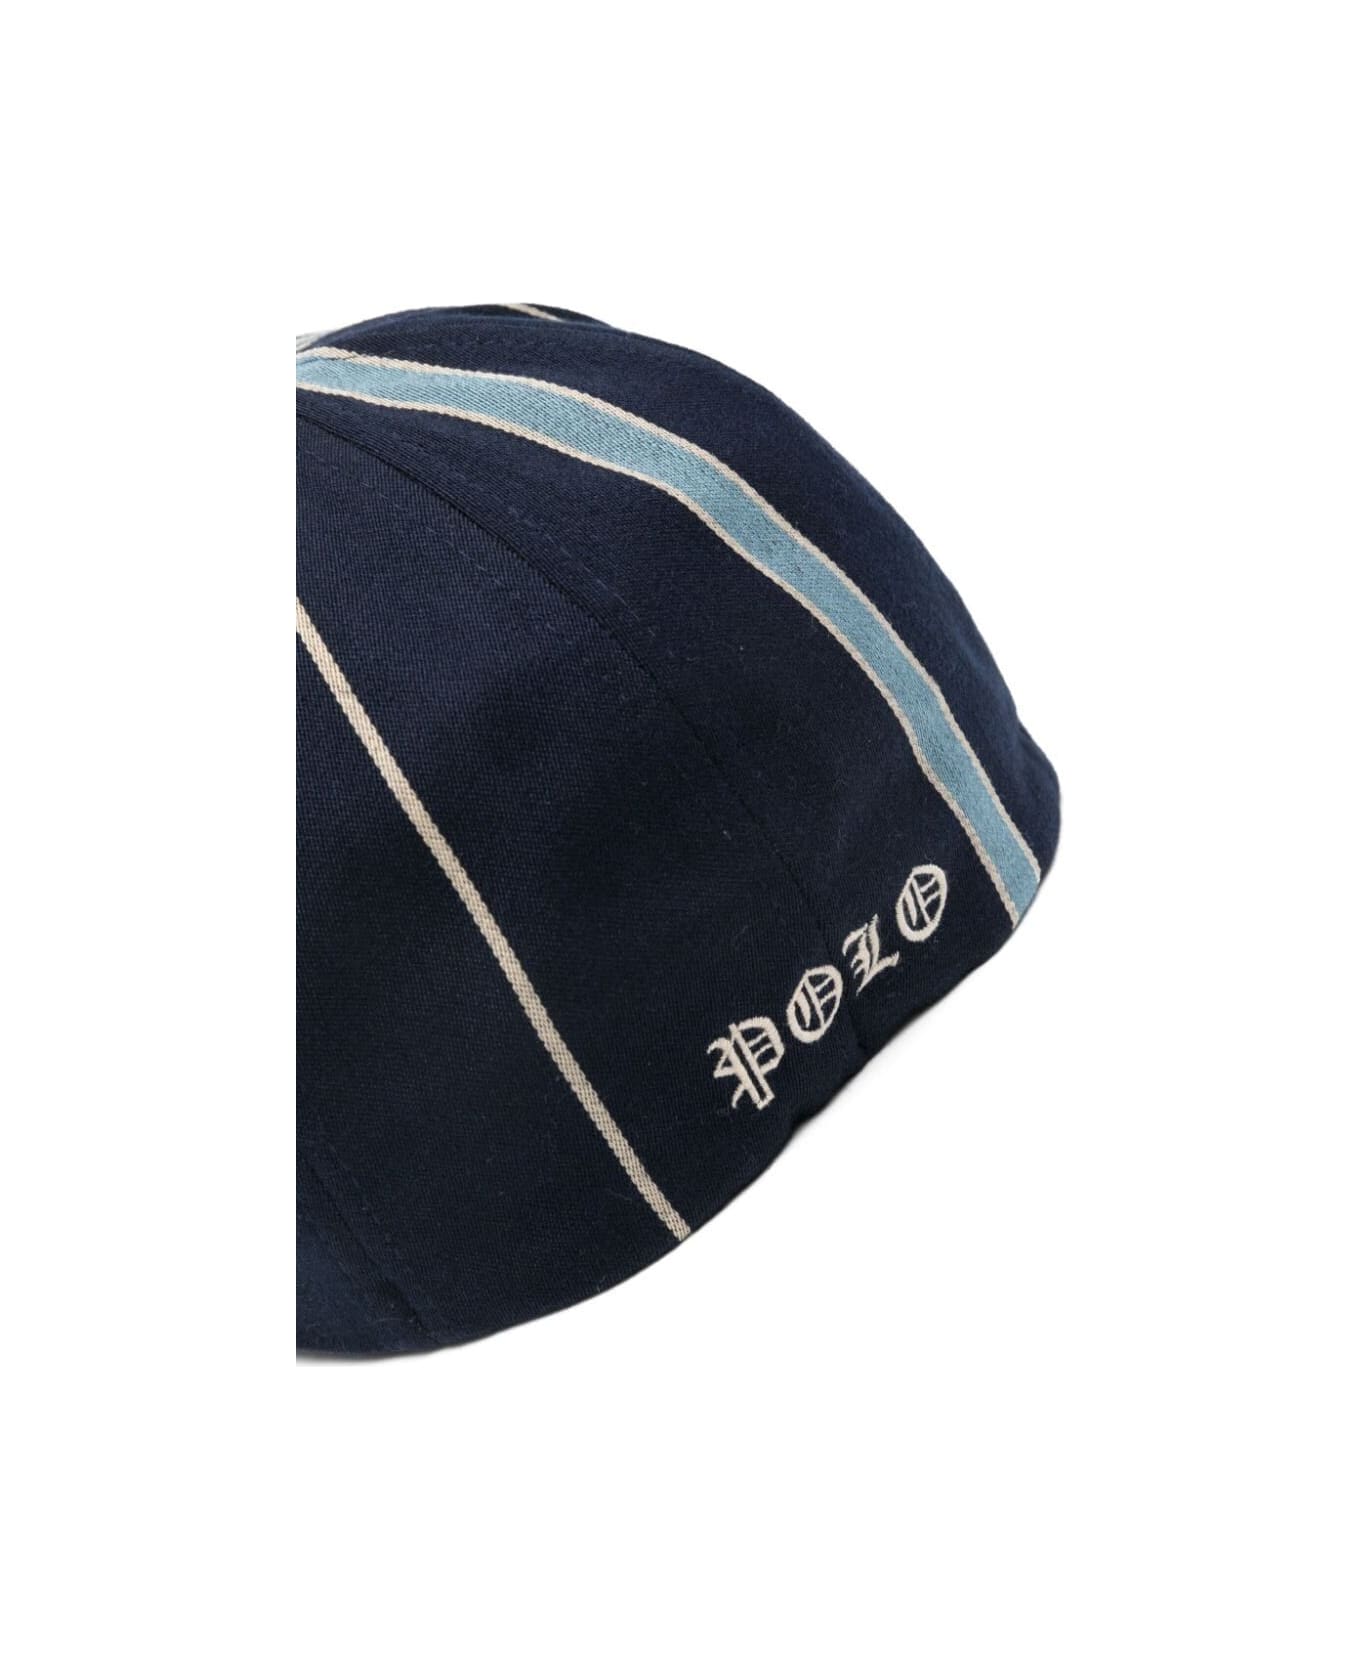 Polo Ralph Lauren Cricket Cap - Stripe Multi